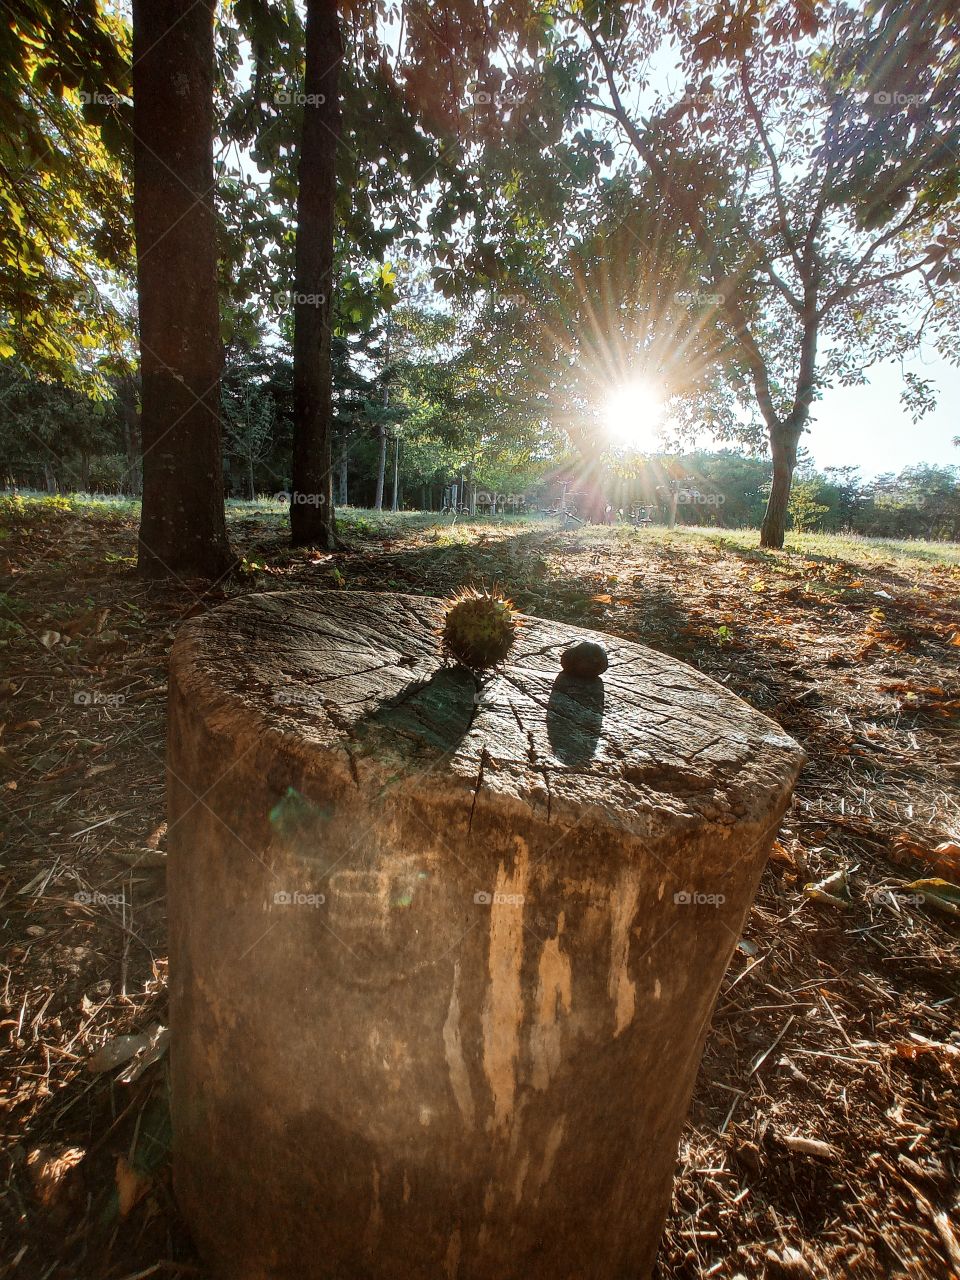 Chestnut on a tree stump under the setting sun